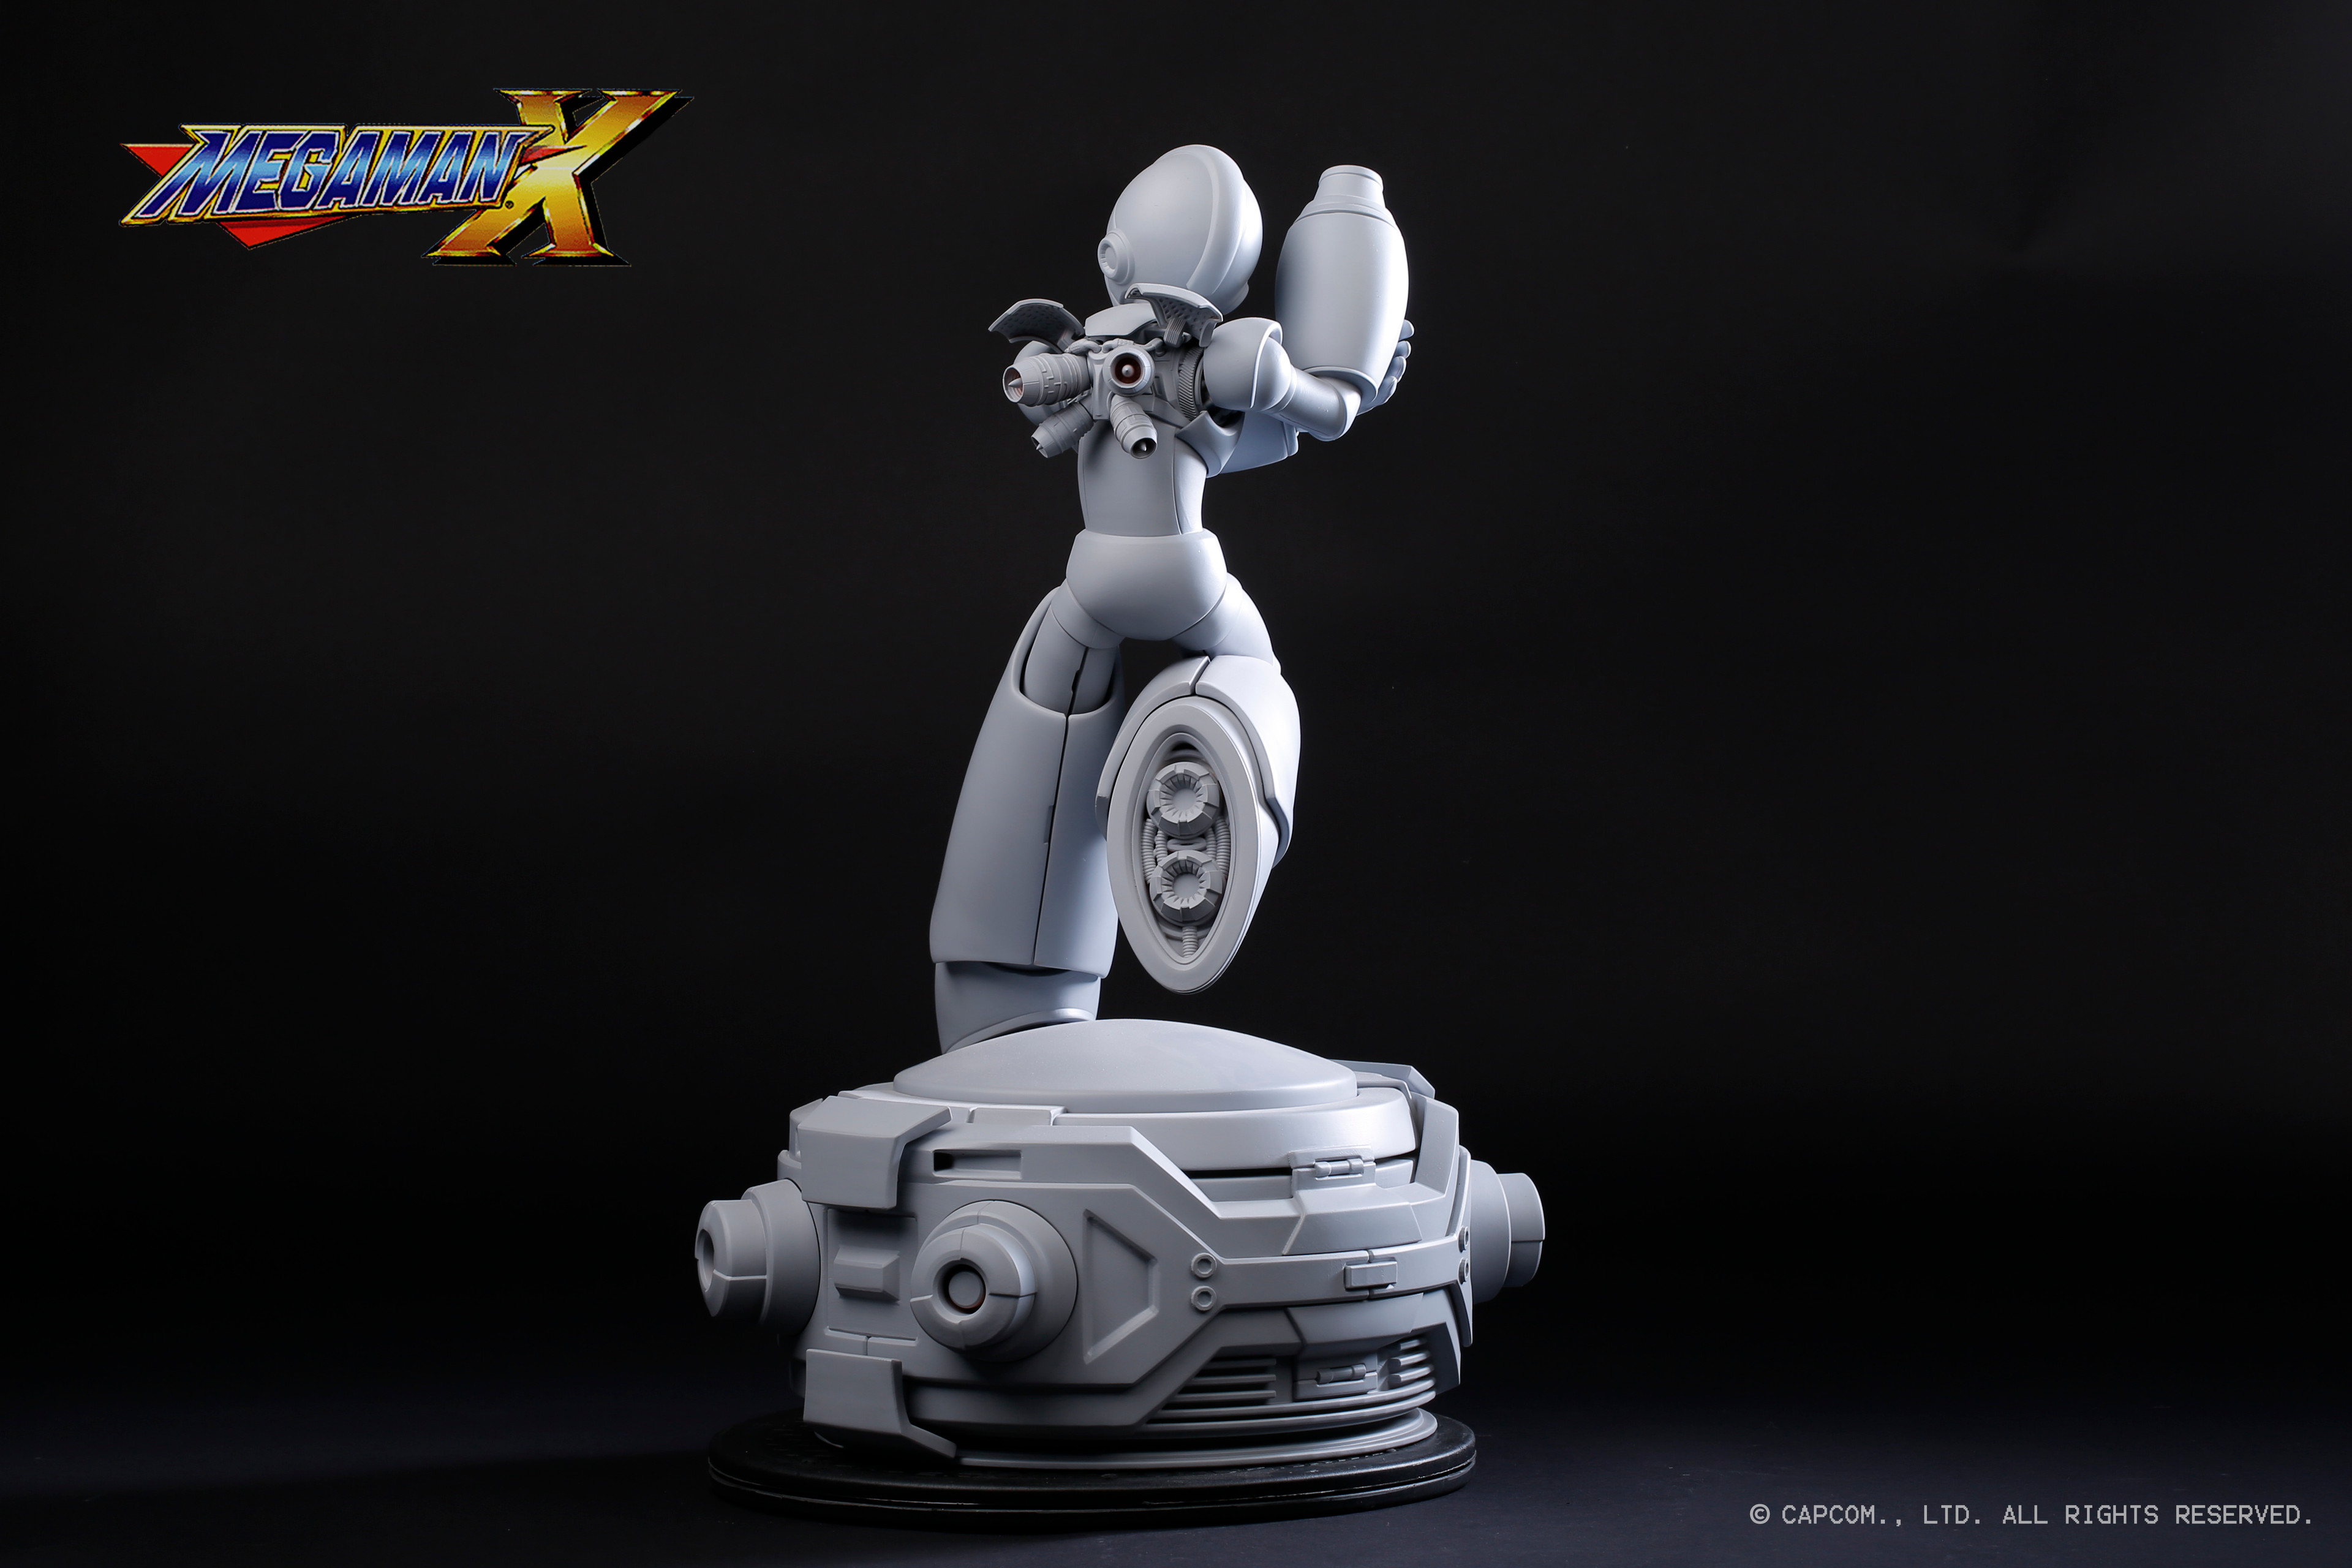 Megaman X Statue (WIP)
Artist: Mufizal Mokhtar